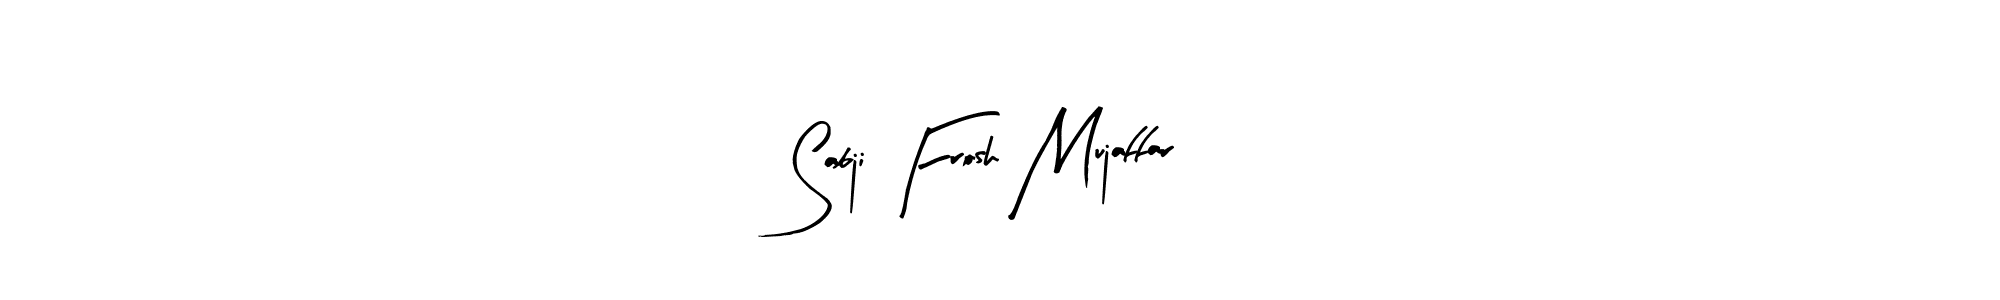 How to Draw Sabji Frosh Mujaffar signature style? Arty Signature is a latest design signature styles for name Sabji Frosh Mujaffar. Sabji Frosh Mujaffar signature style 8 images and pictures png